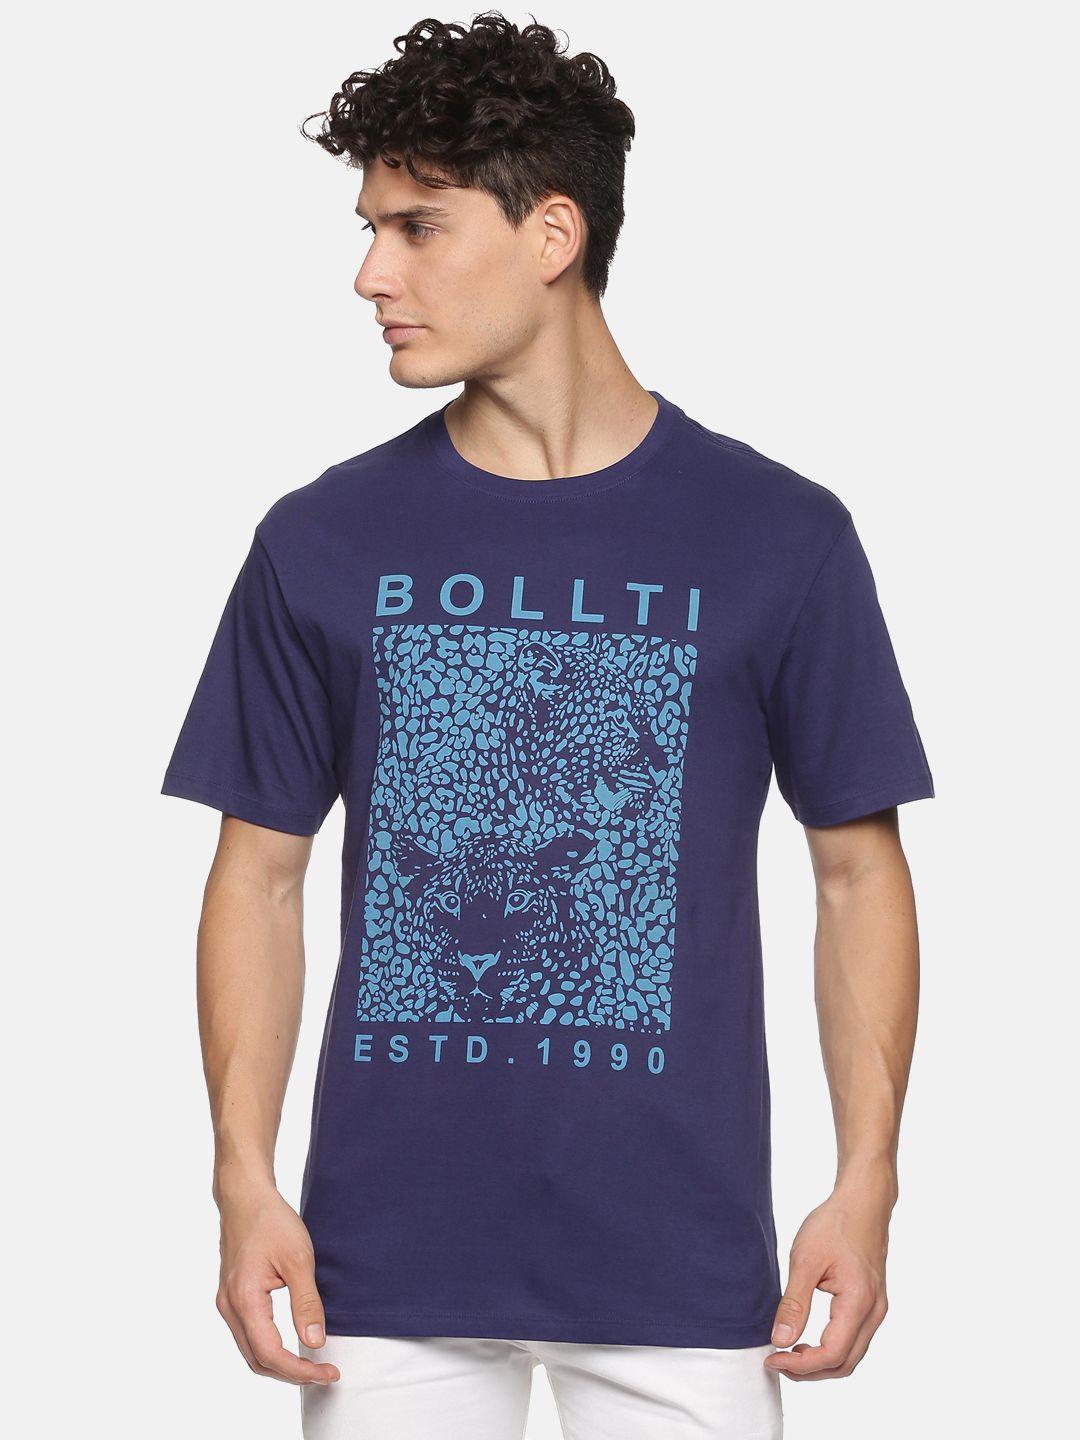 bollti graphic printed pure cotton t-shirt